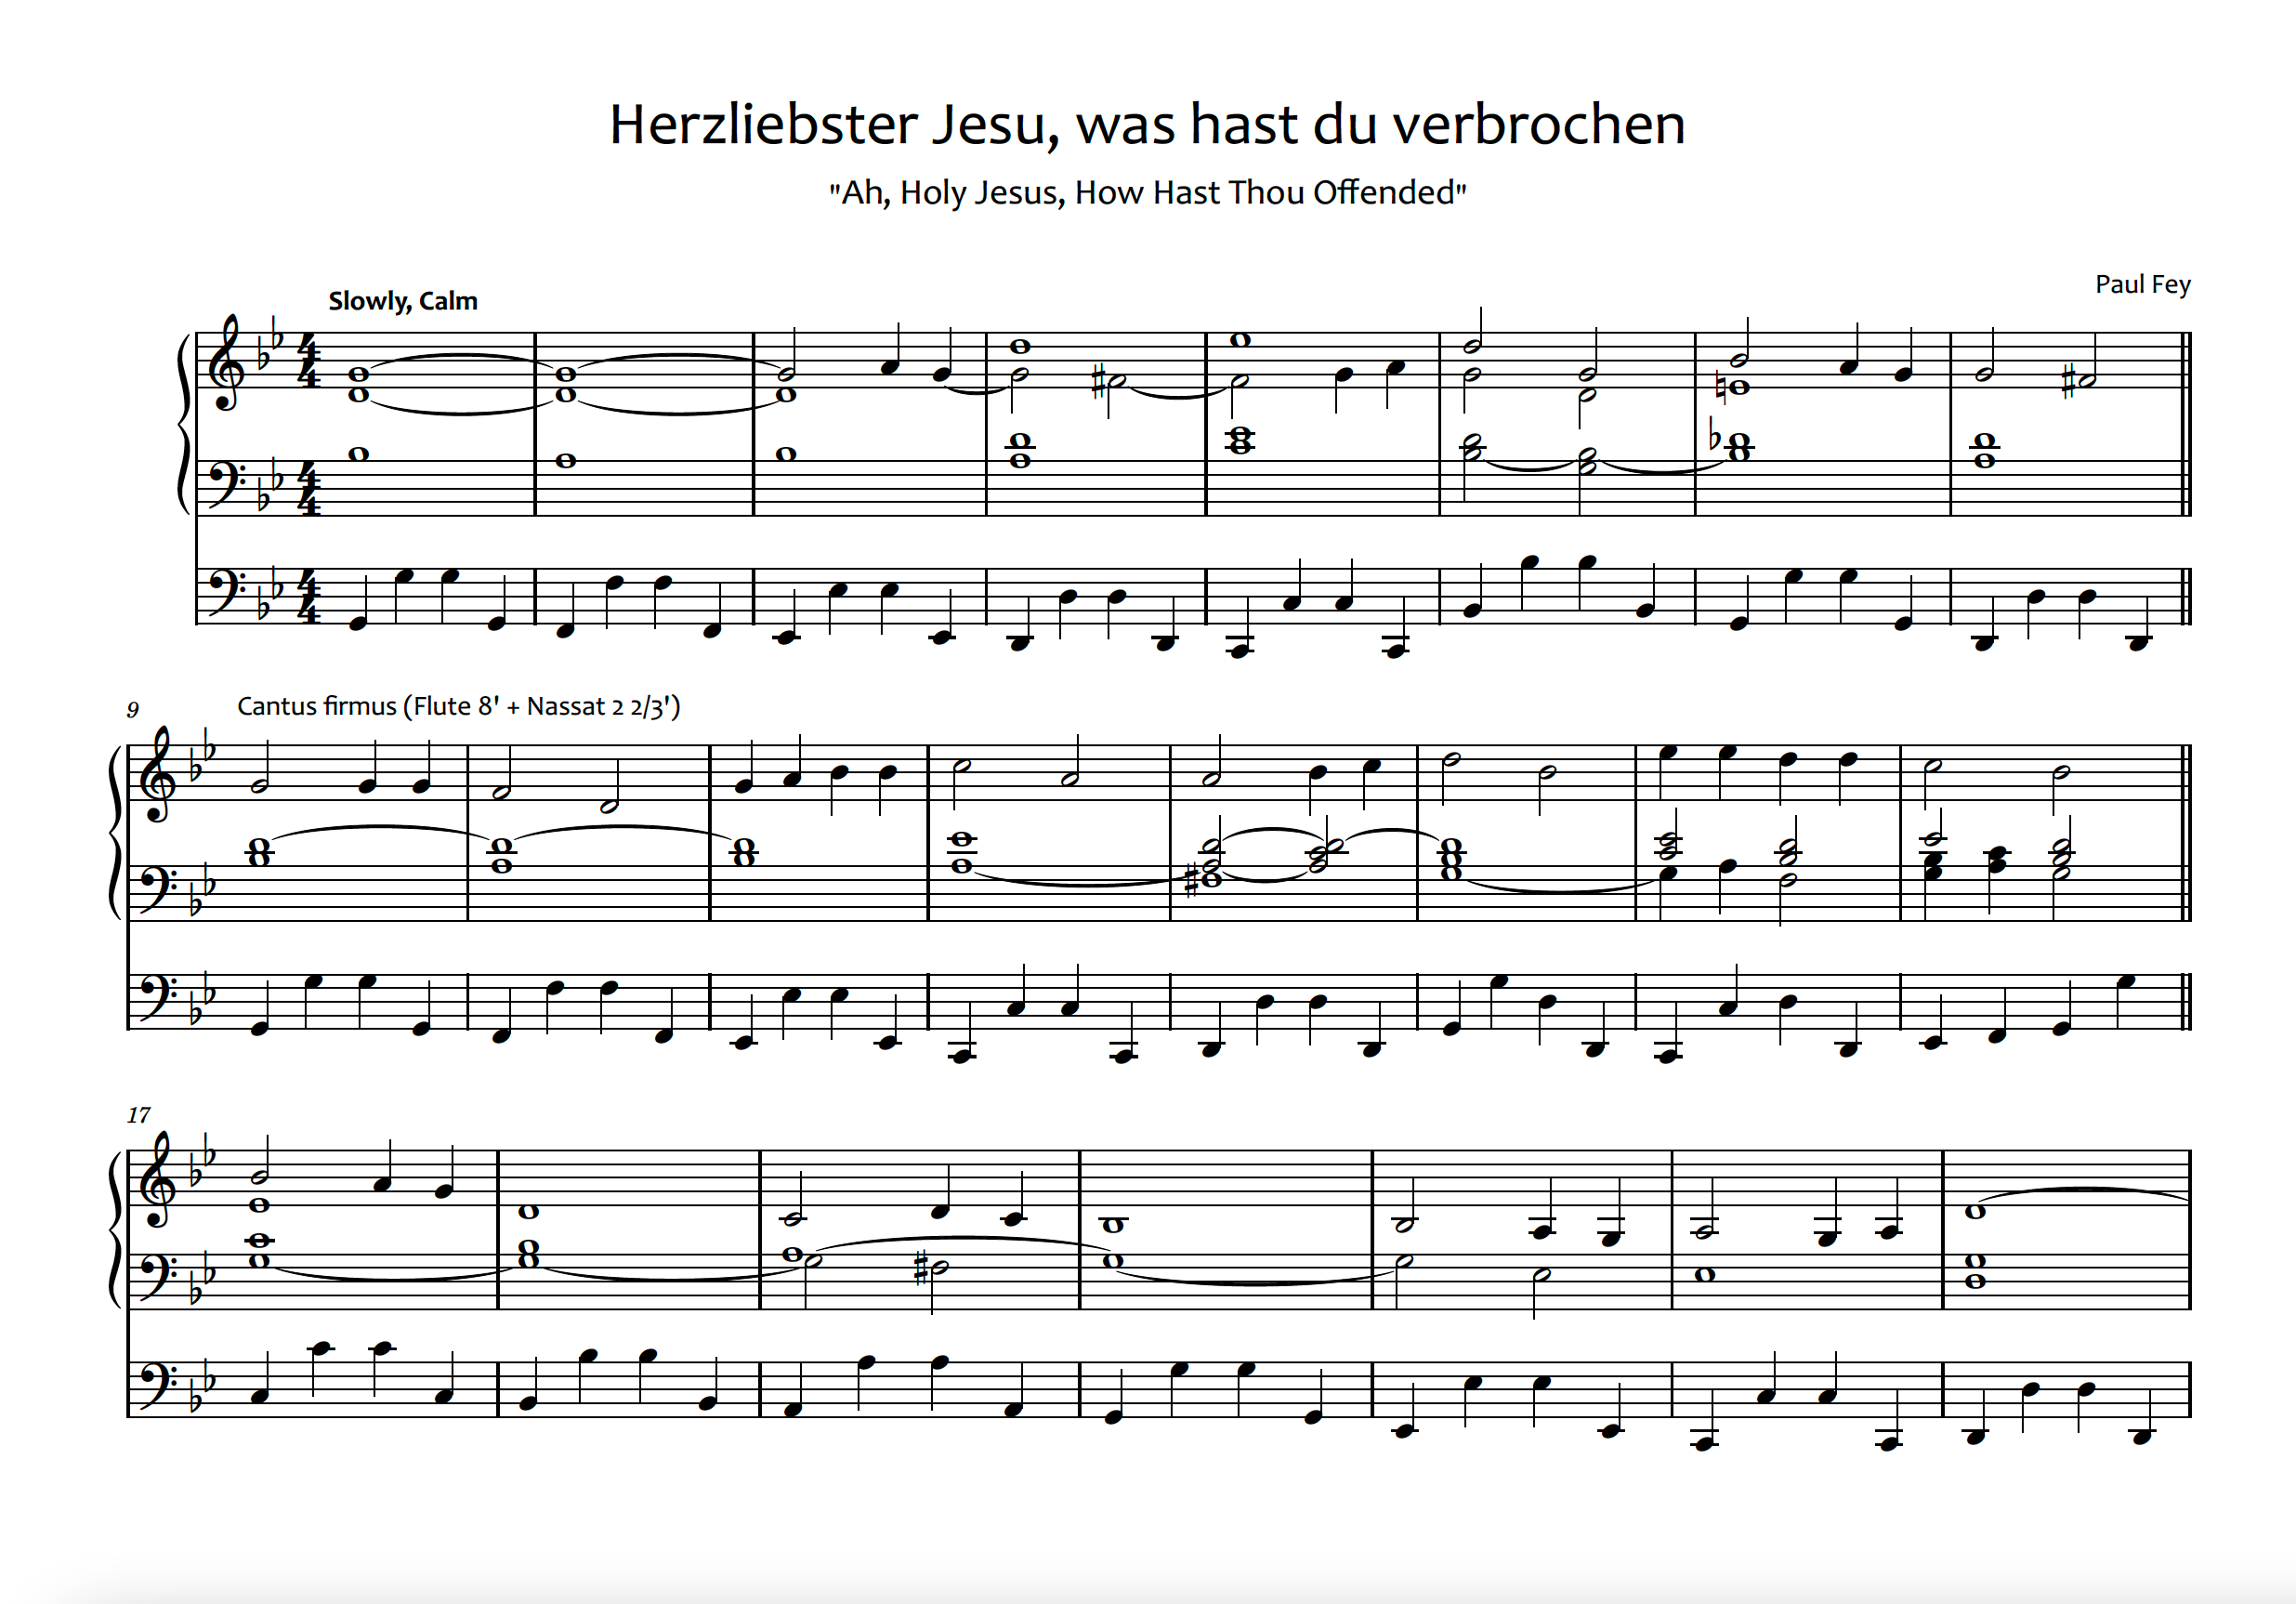 Meditation on "Herzliebster Jesu" (Sheet Music) - Music for Pipe Organ by Paul Fey